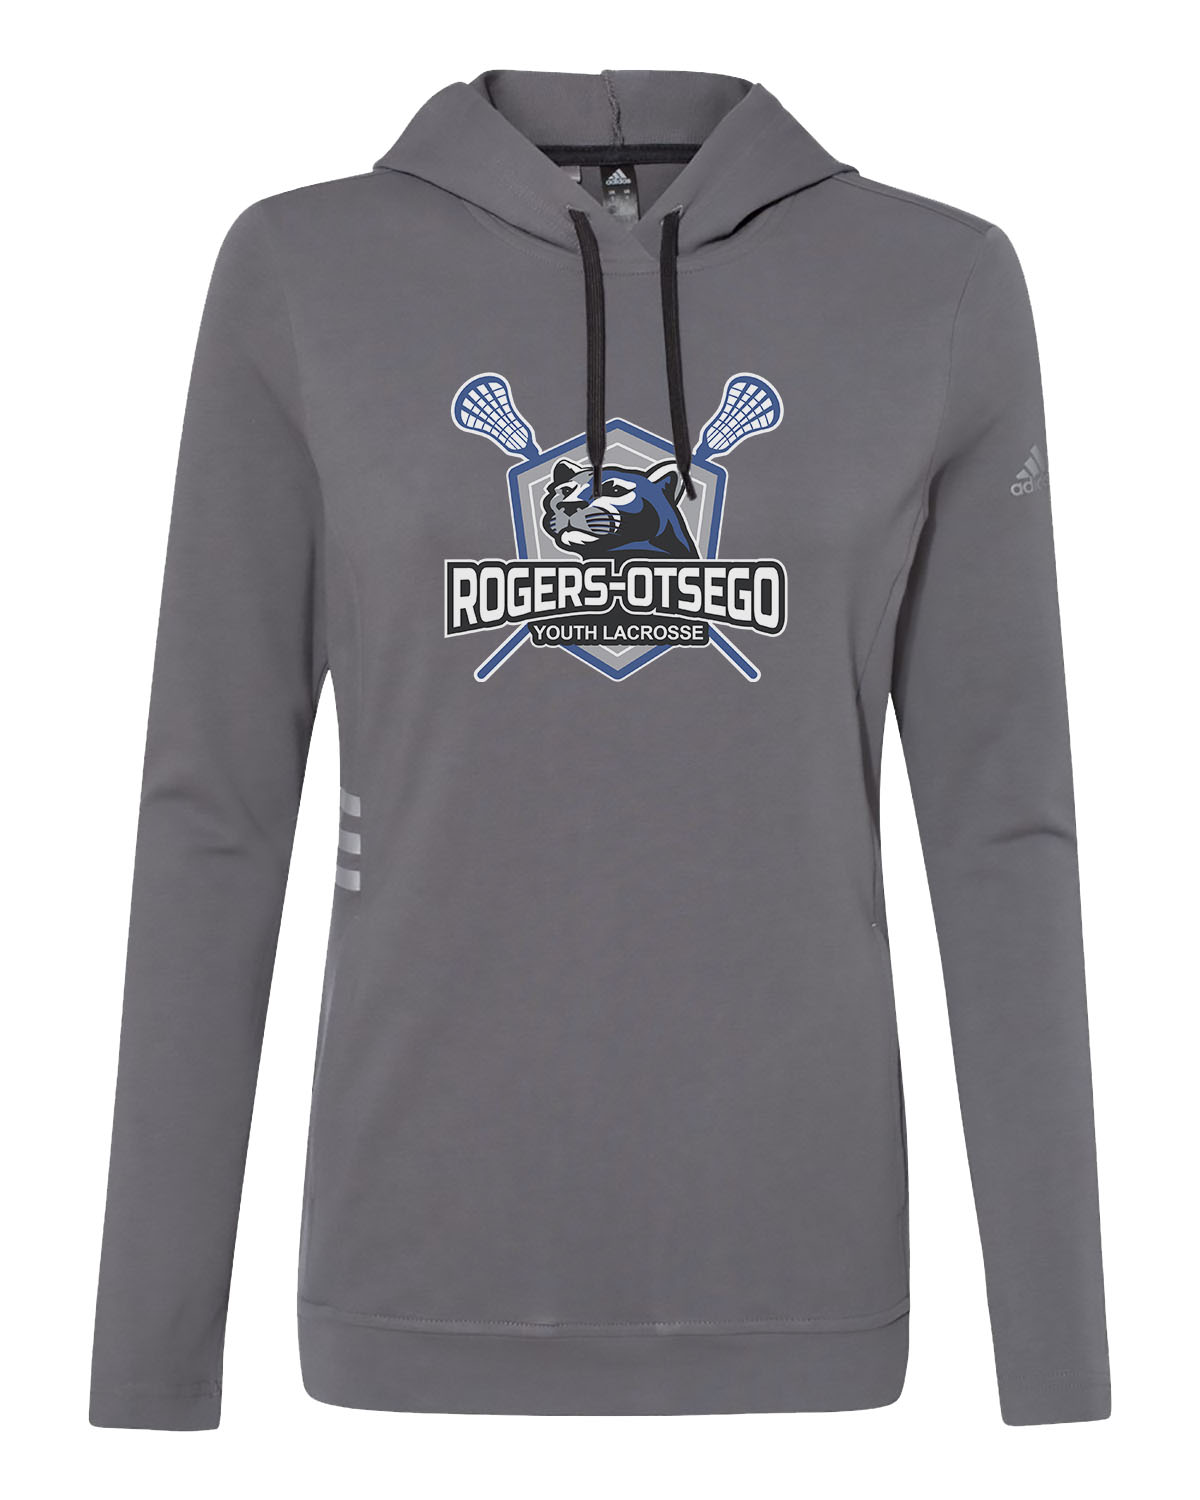 Rogers-Otsego Lacrosse // Women's Lightweight Hoodie - Adidas